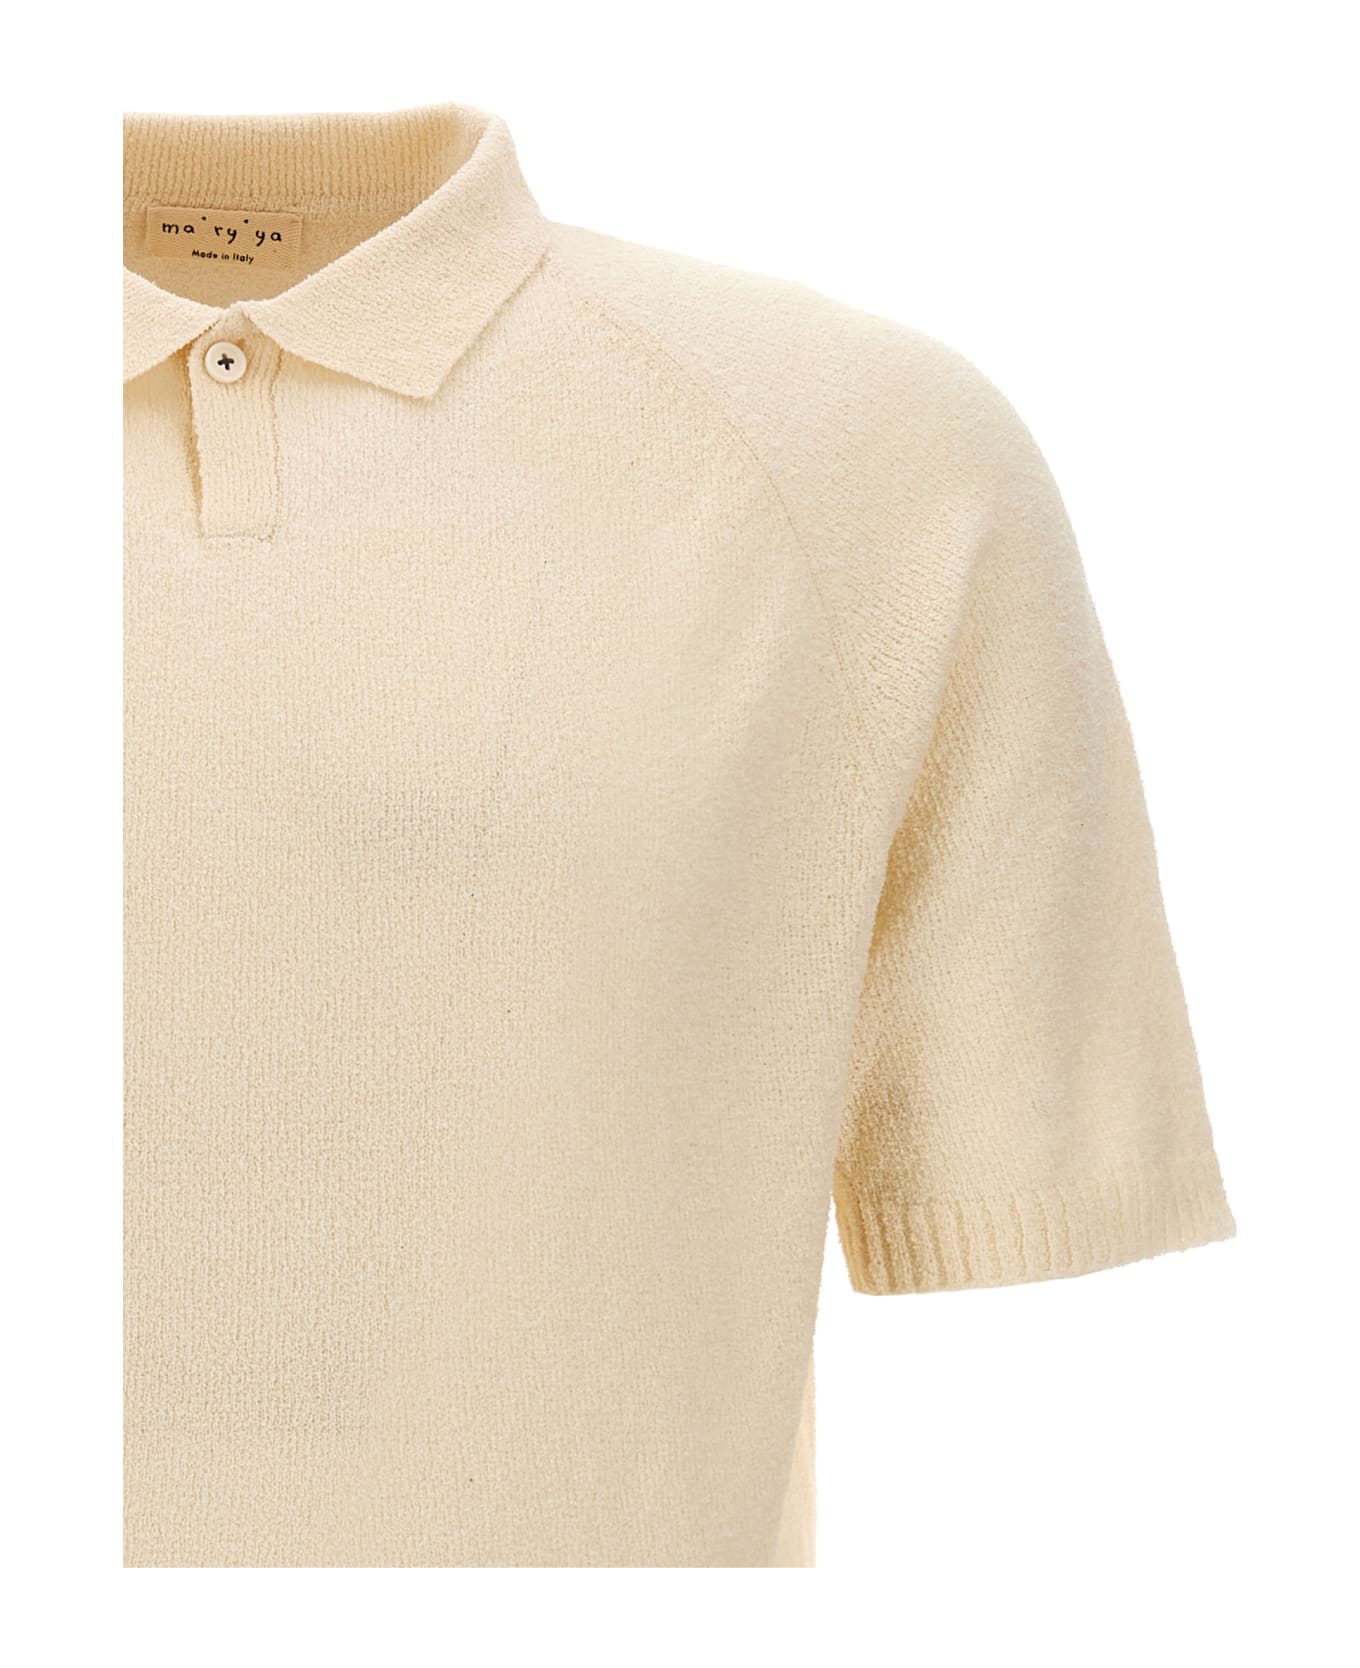 Ma'ry'ya Cotton Polo Shirt - White ポロシャツ